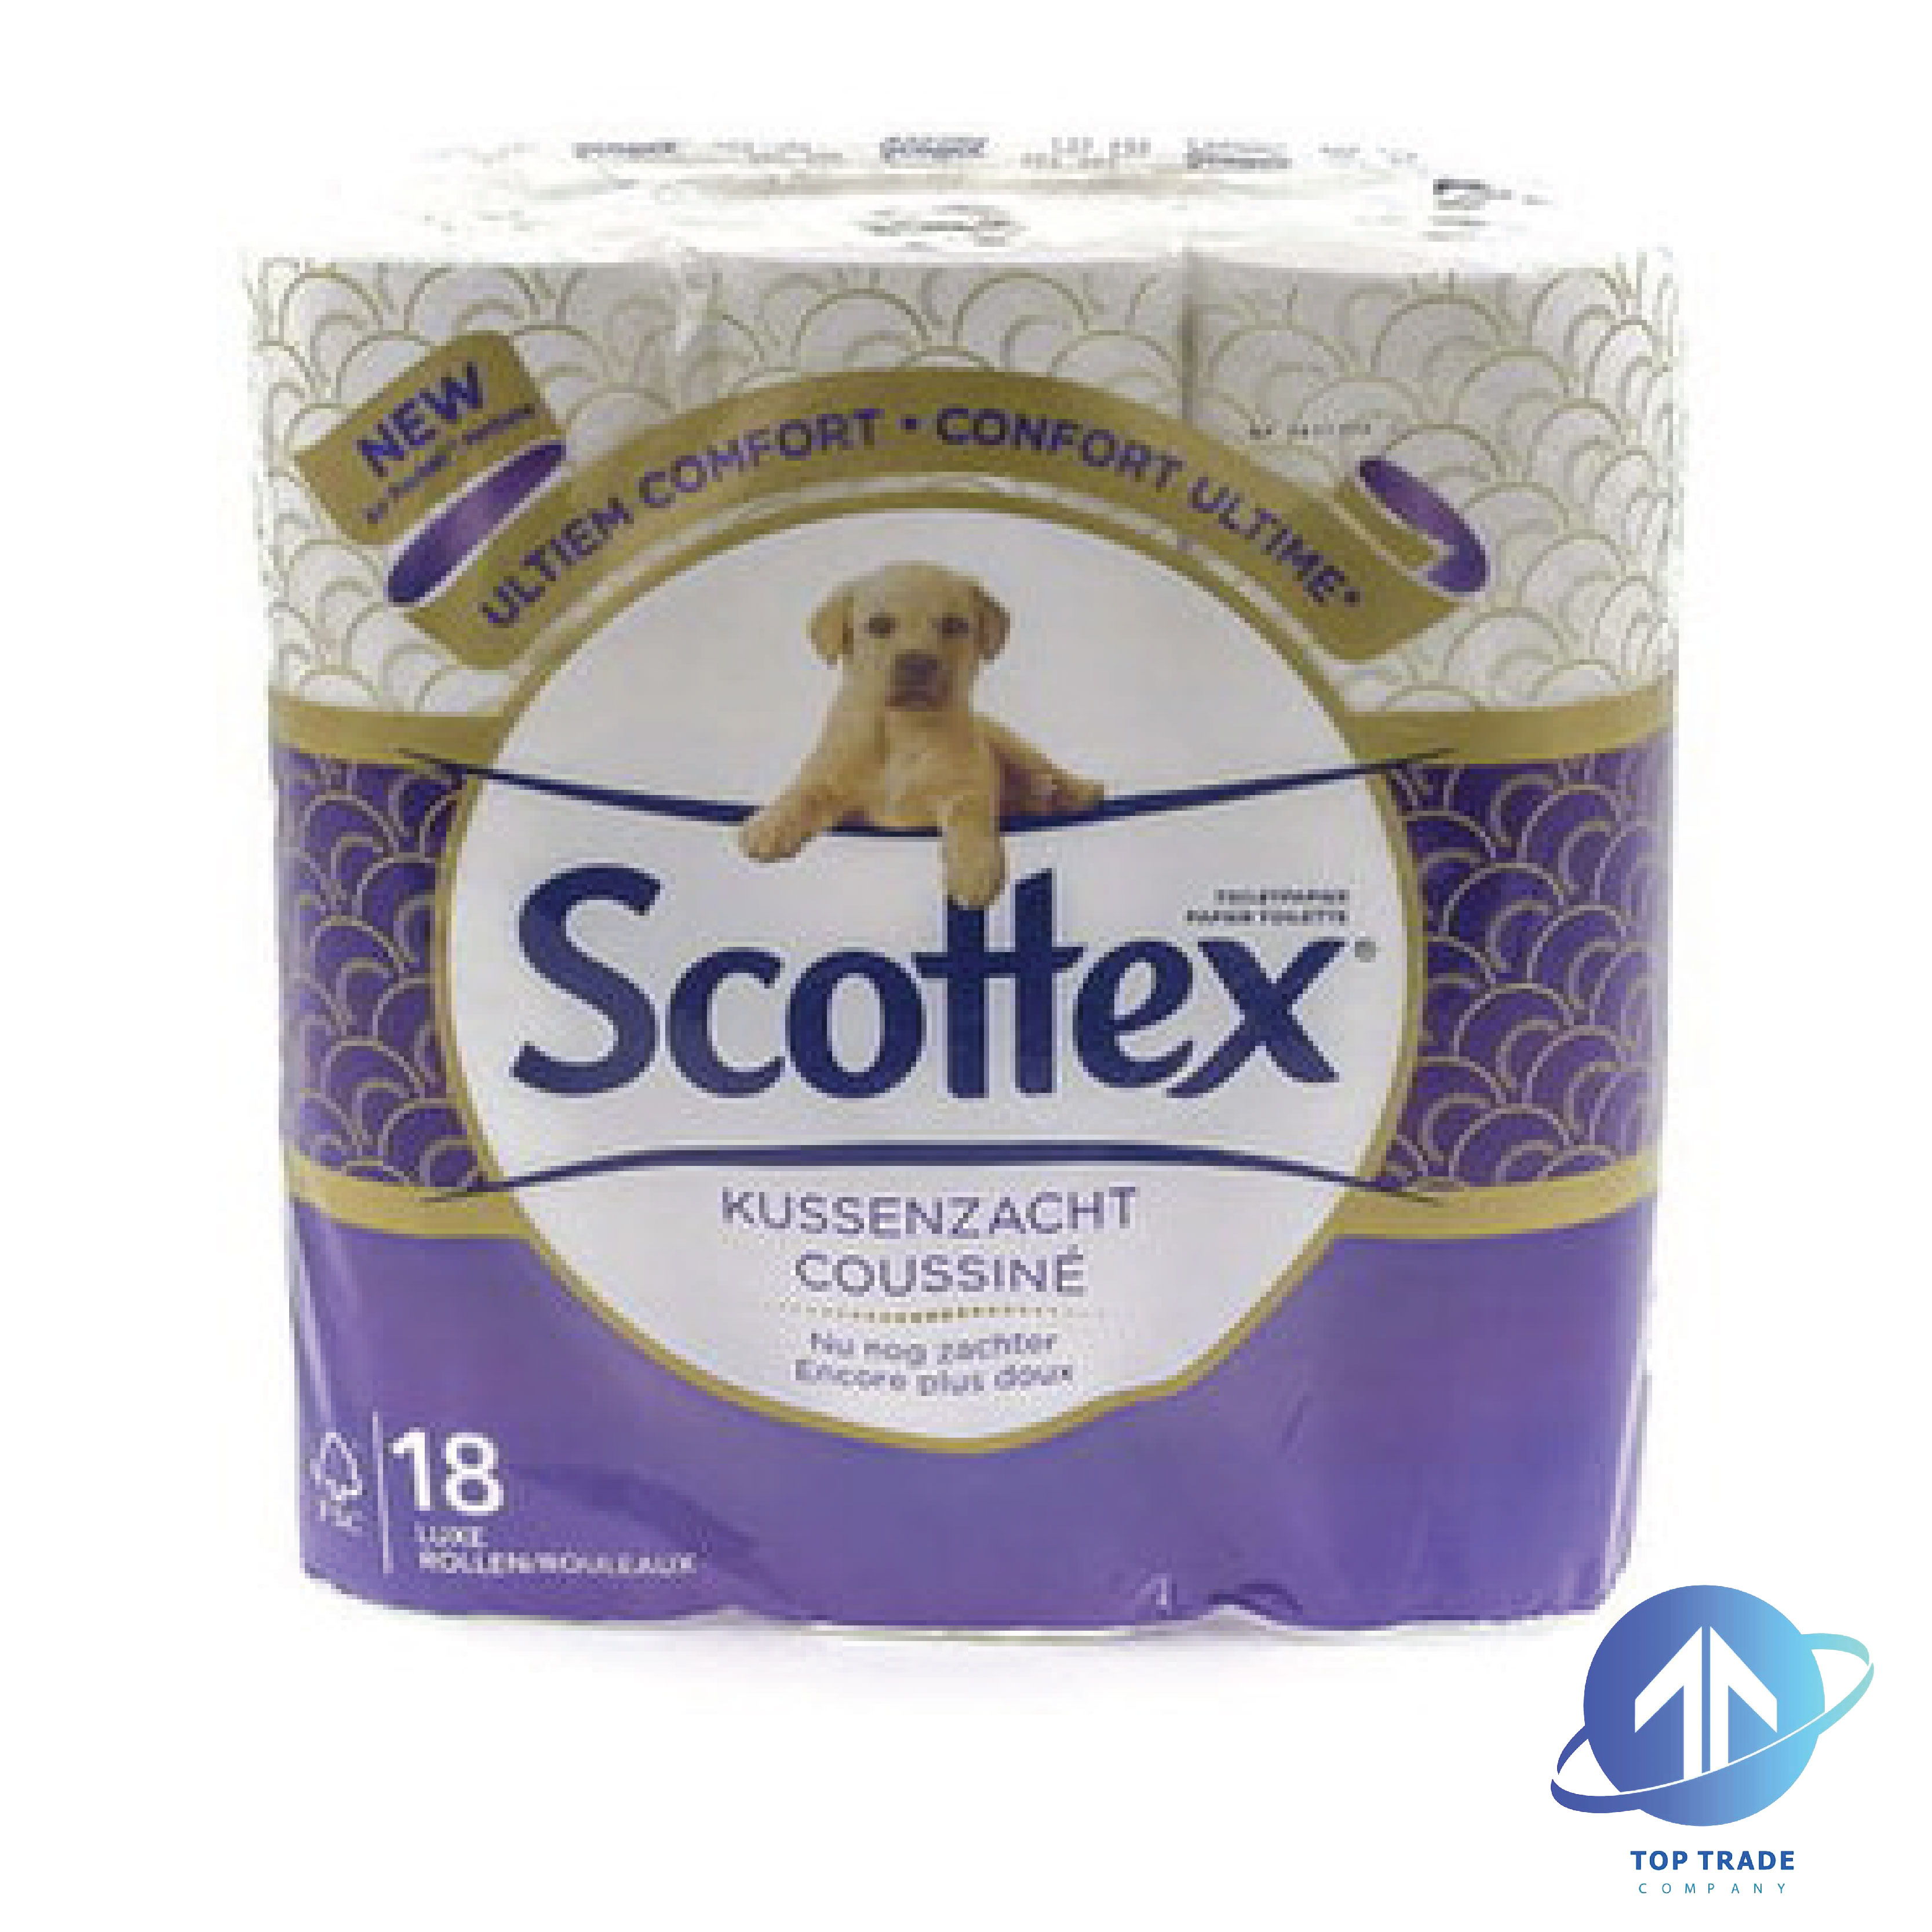 Scottex cushion soft toilet paper 18 rolls 3 layers